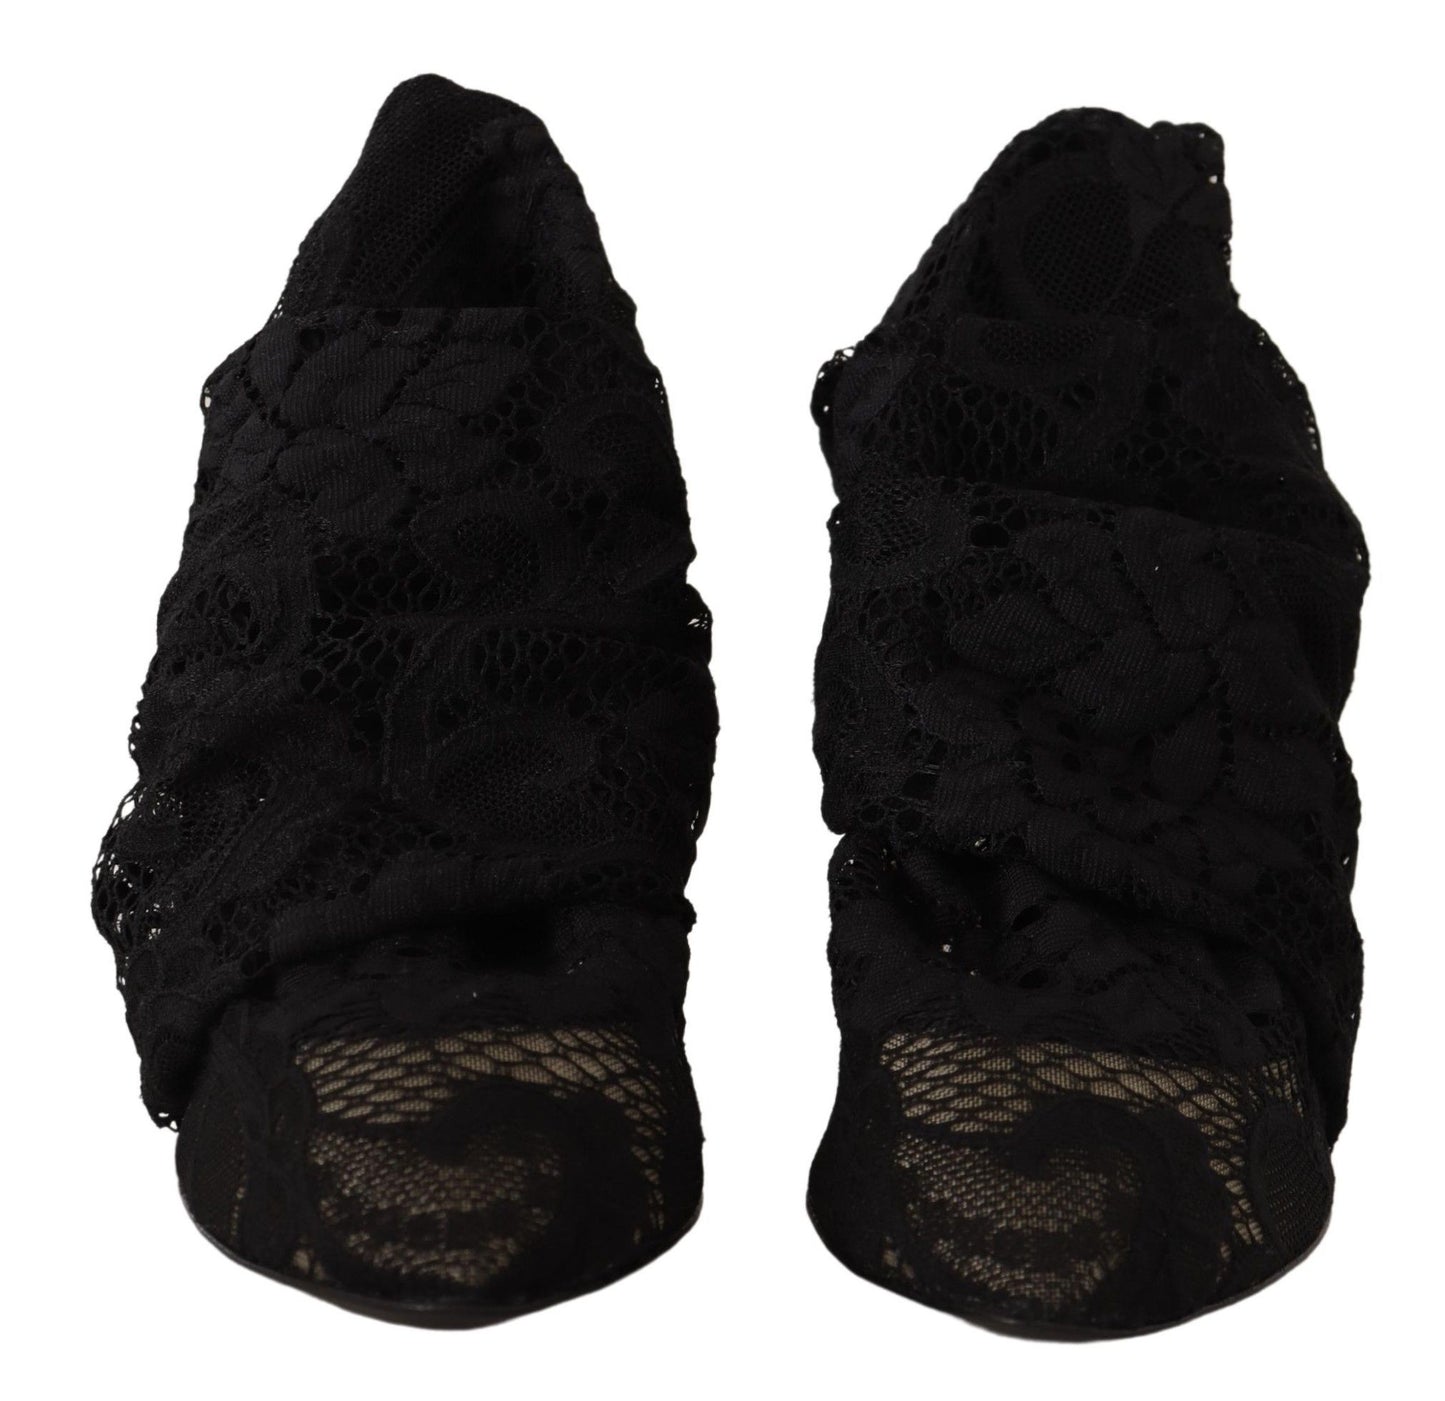 Black Stretch Socks Taormina Lace Boots Shoes